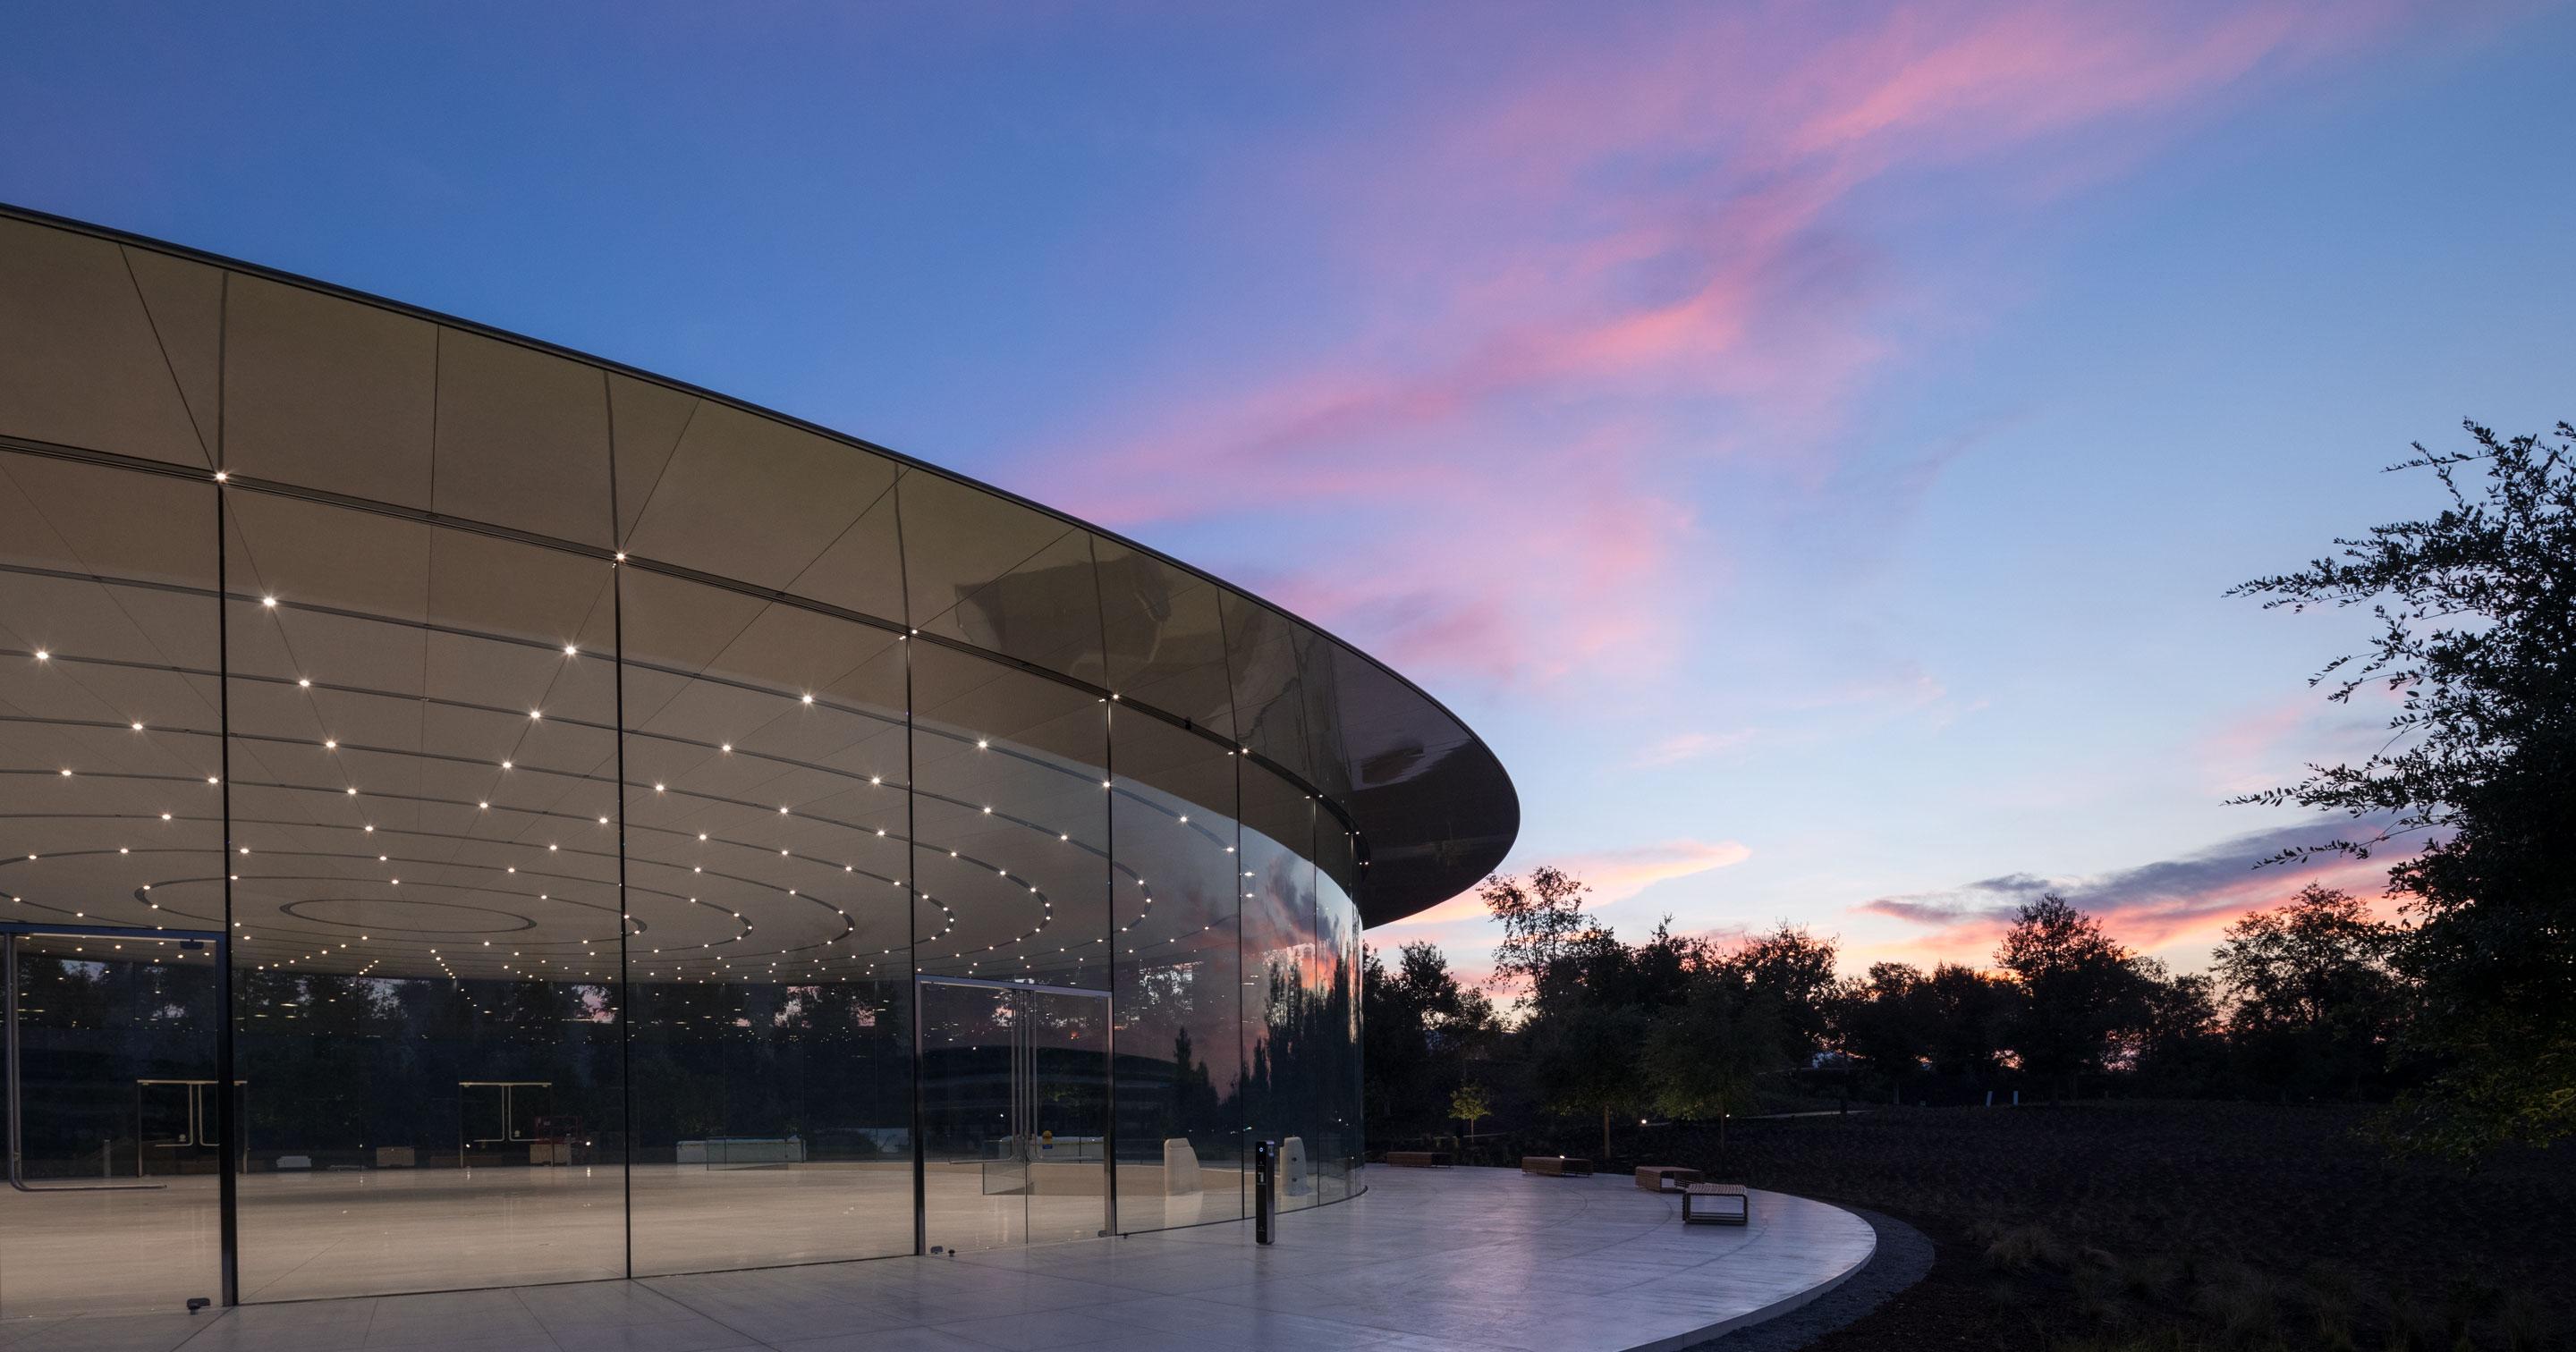 Apple Park's Steve Jobs Theater wins the engineering award